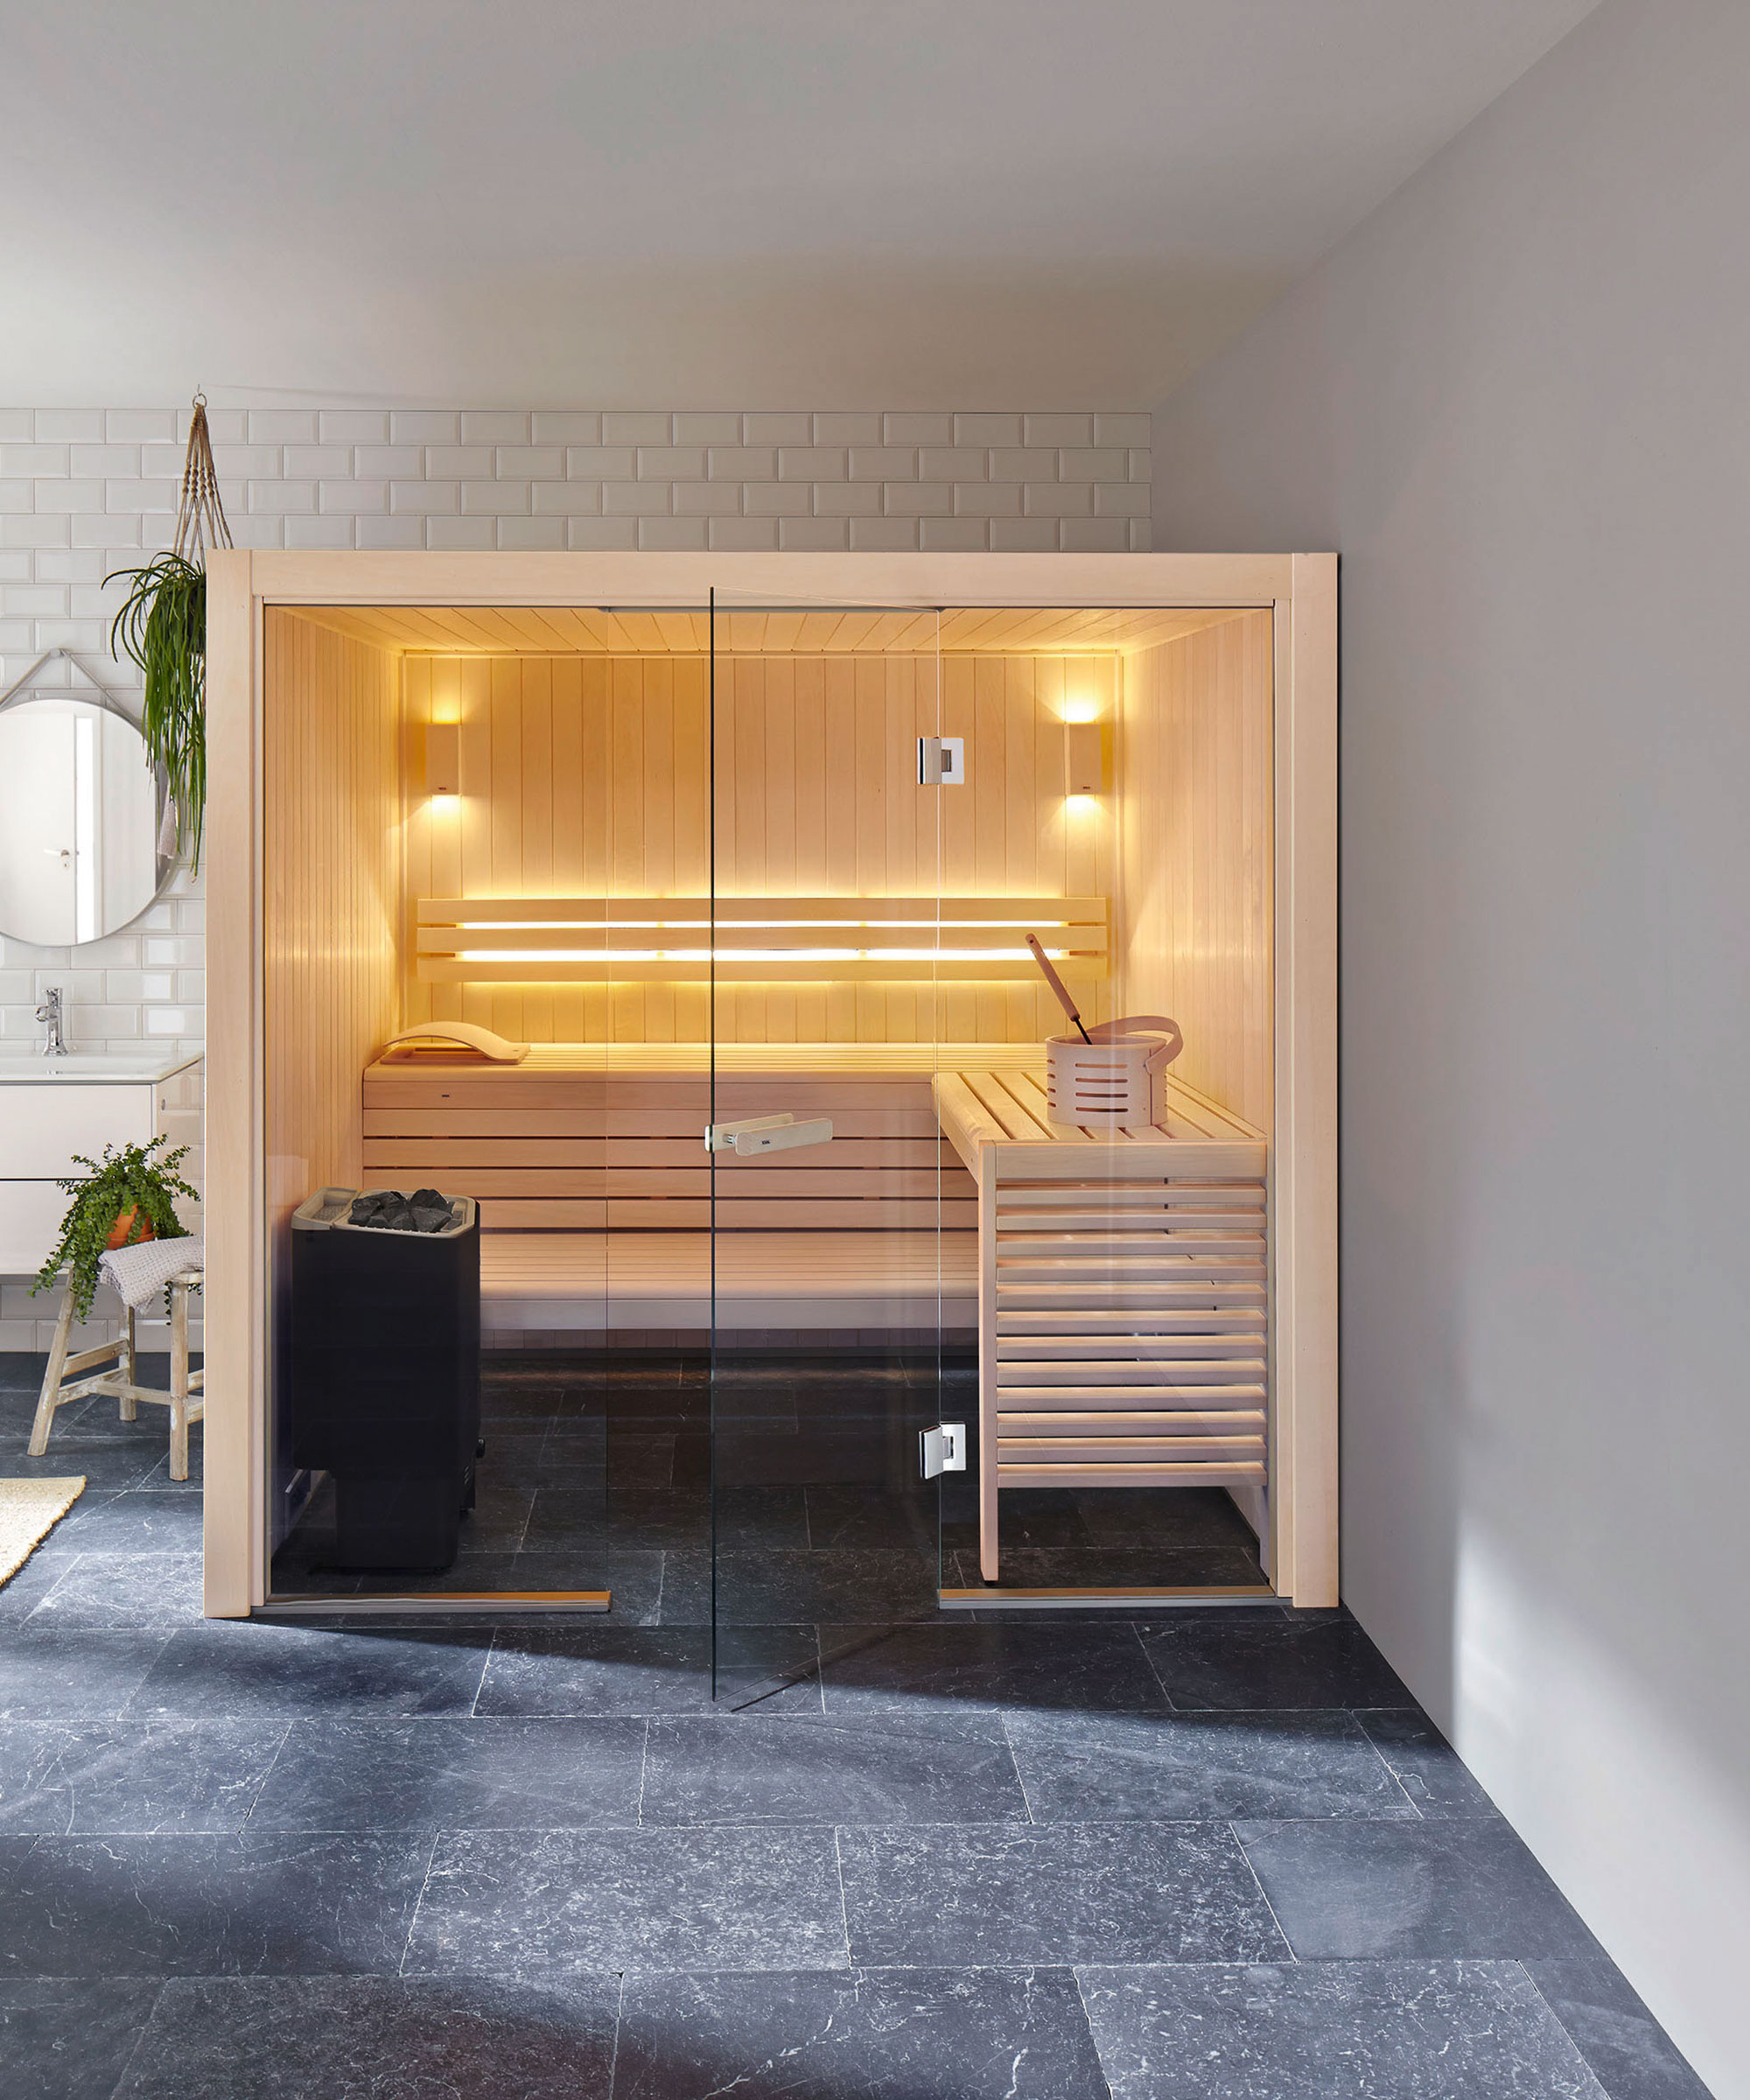 Home sauna: how to add a sauna to your home